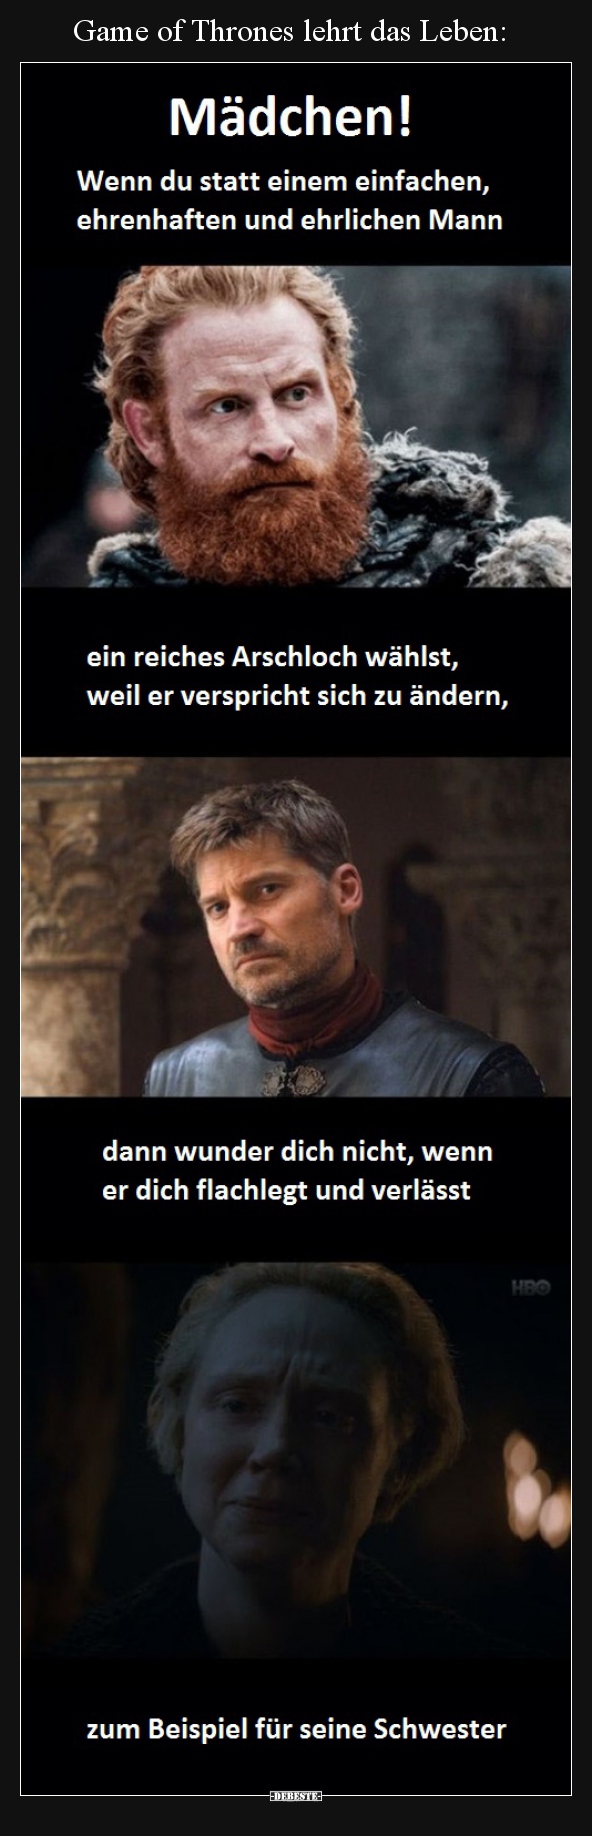 Game of Thrones lehrt das Leben.. - Lustige Bilder | DEBESTE.de